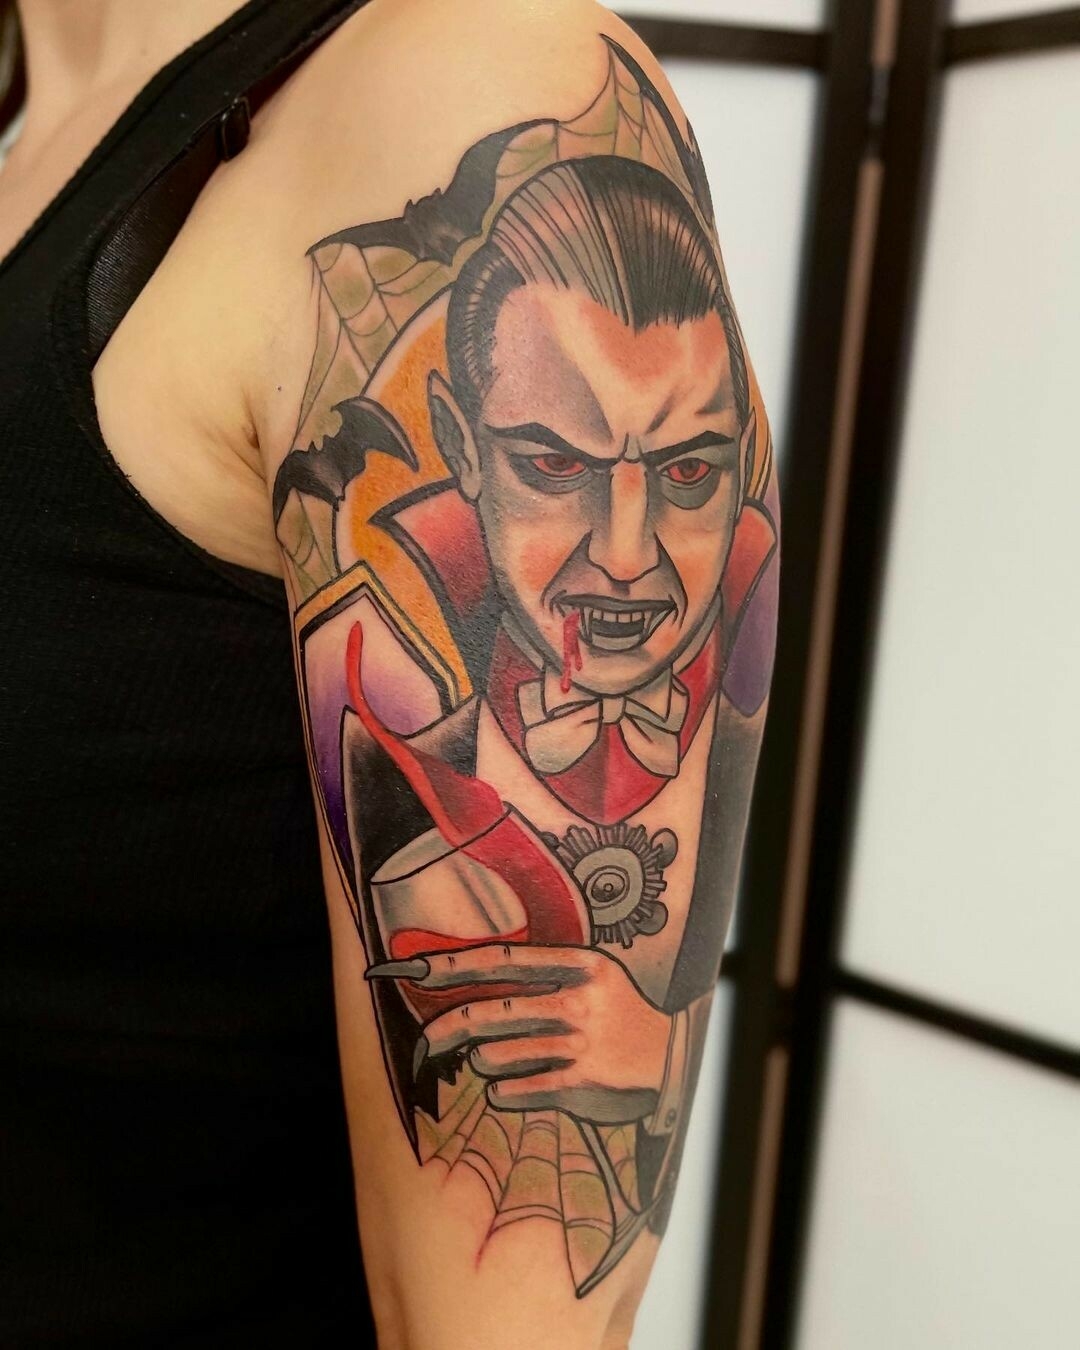 Dracula Tattoo by autopirate on DeviantArt